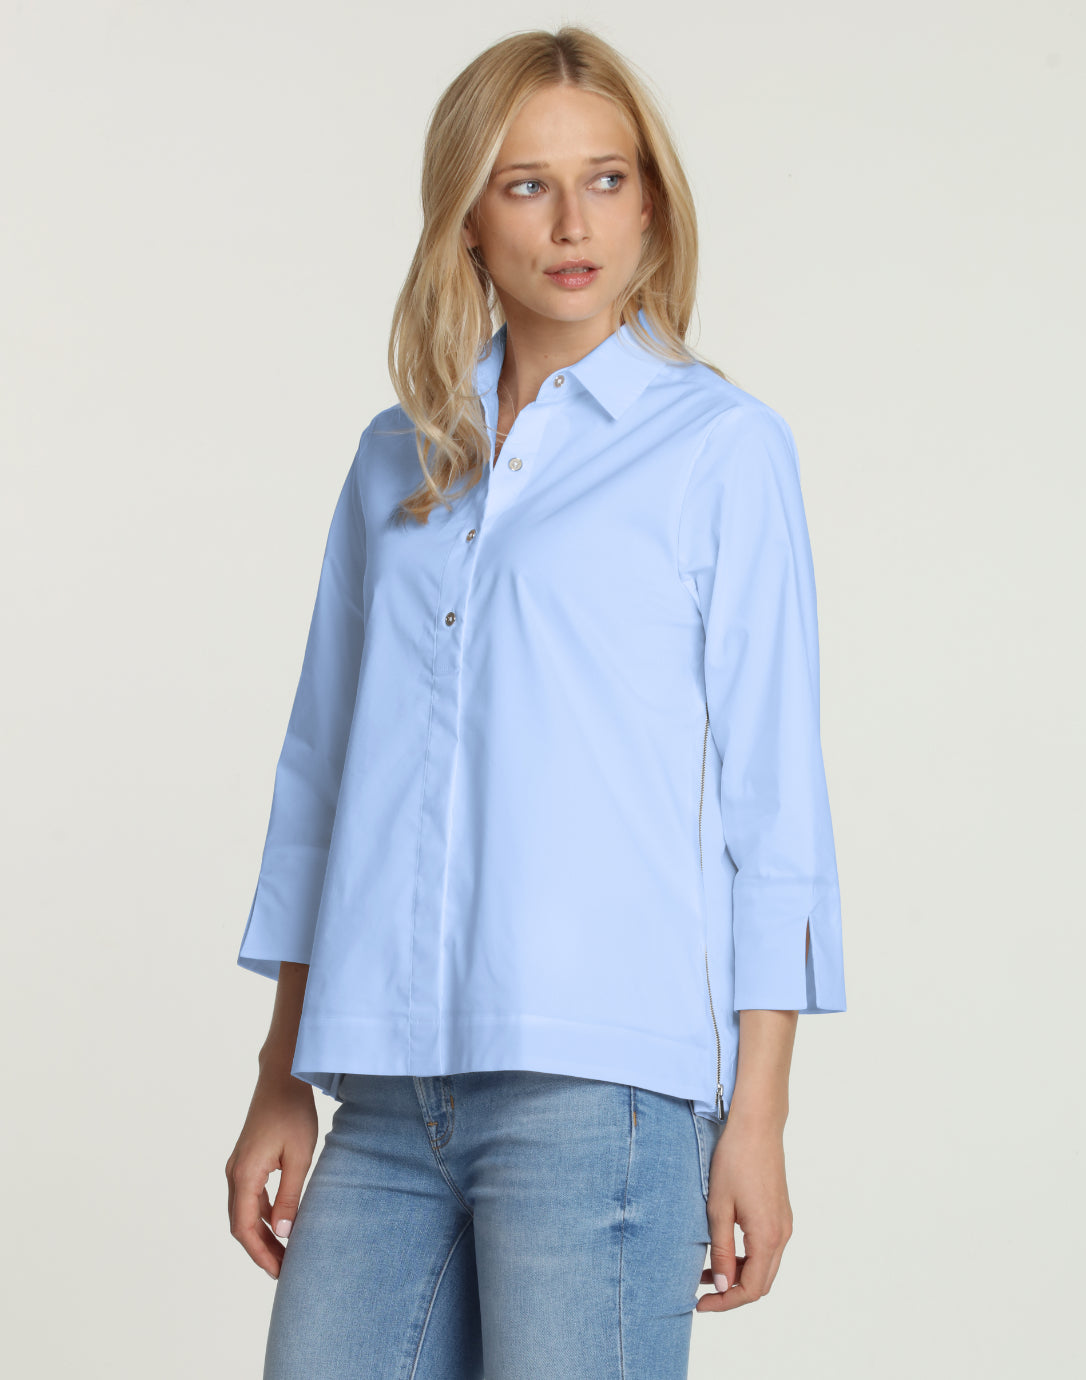 – Sleeve Hinson Shirt Wu Savannah With Side 3/4 Zippers